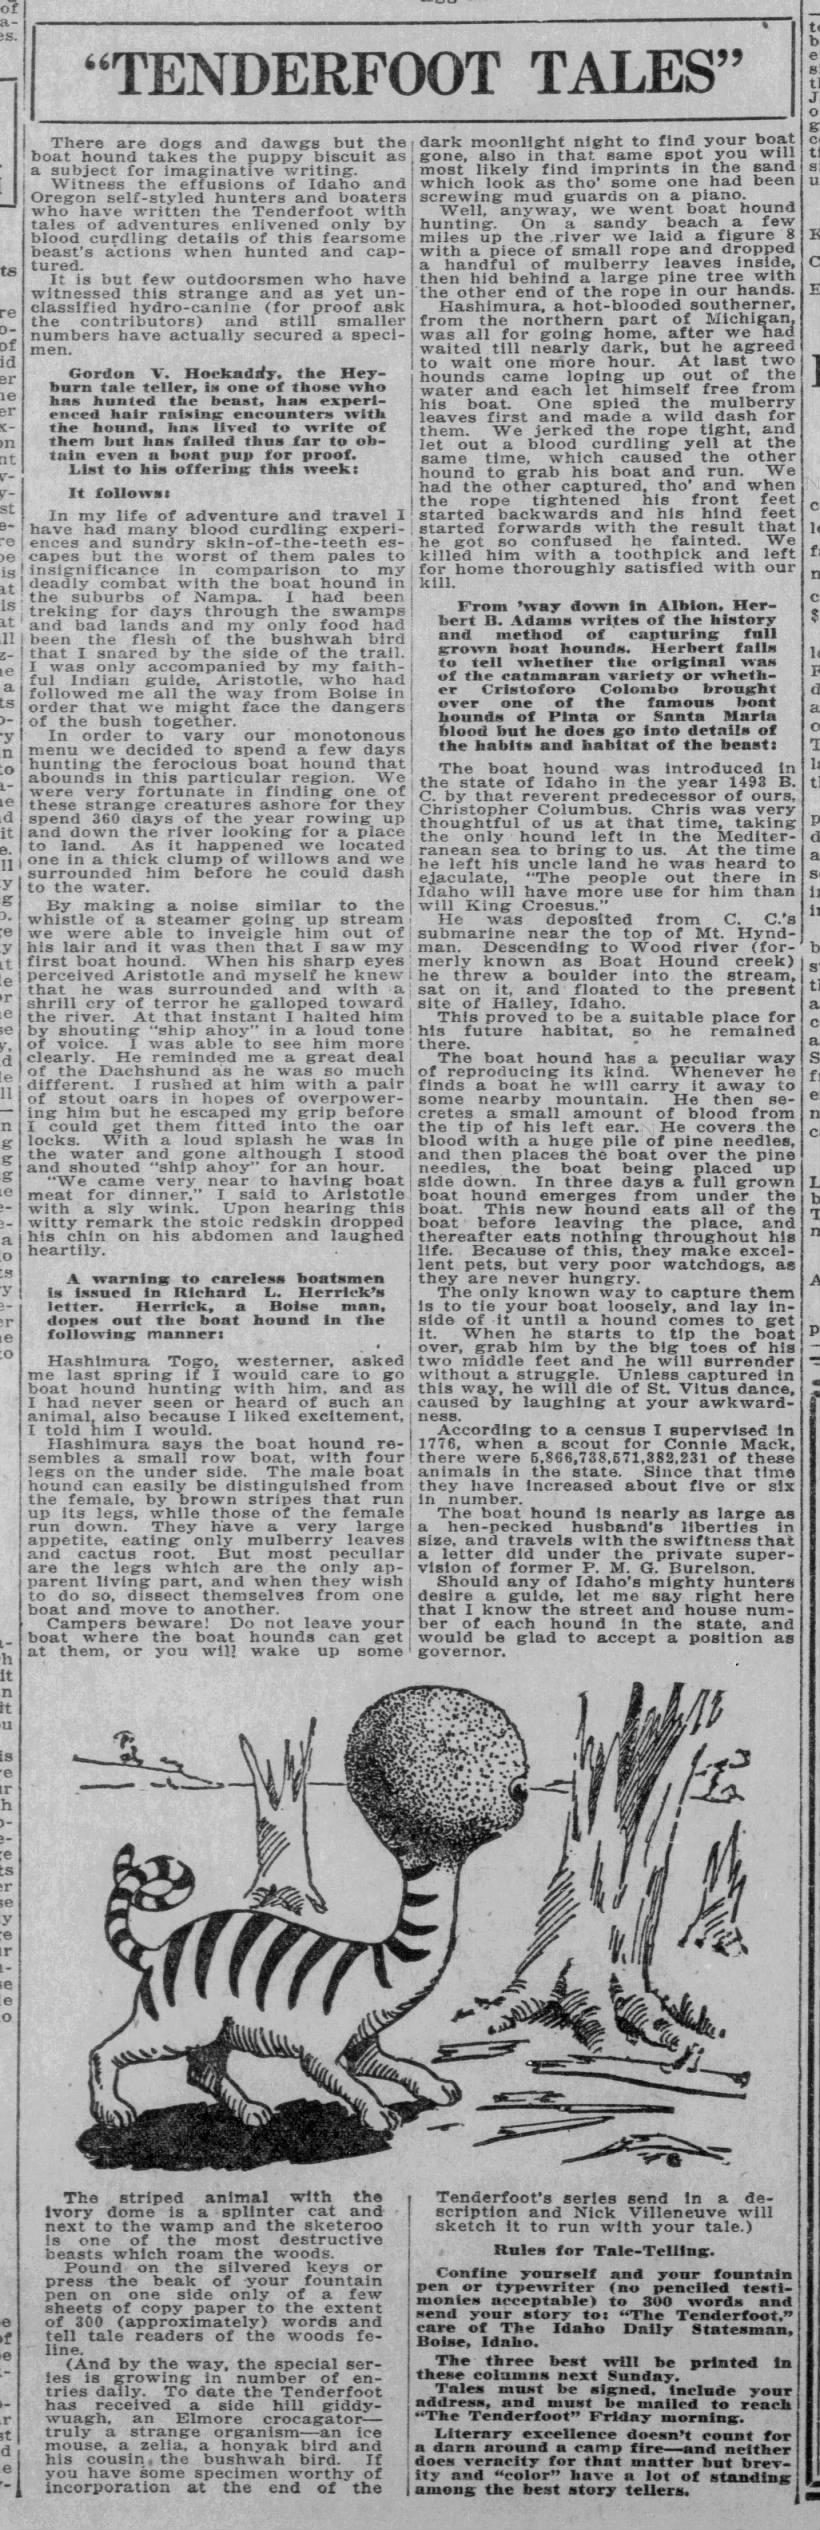 1922-12-10 “Tenderfoot tales”

The Idaho Sunday Statesman (Boise, ID), p. 12